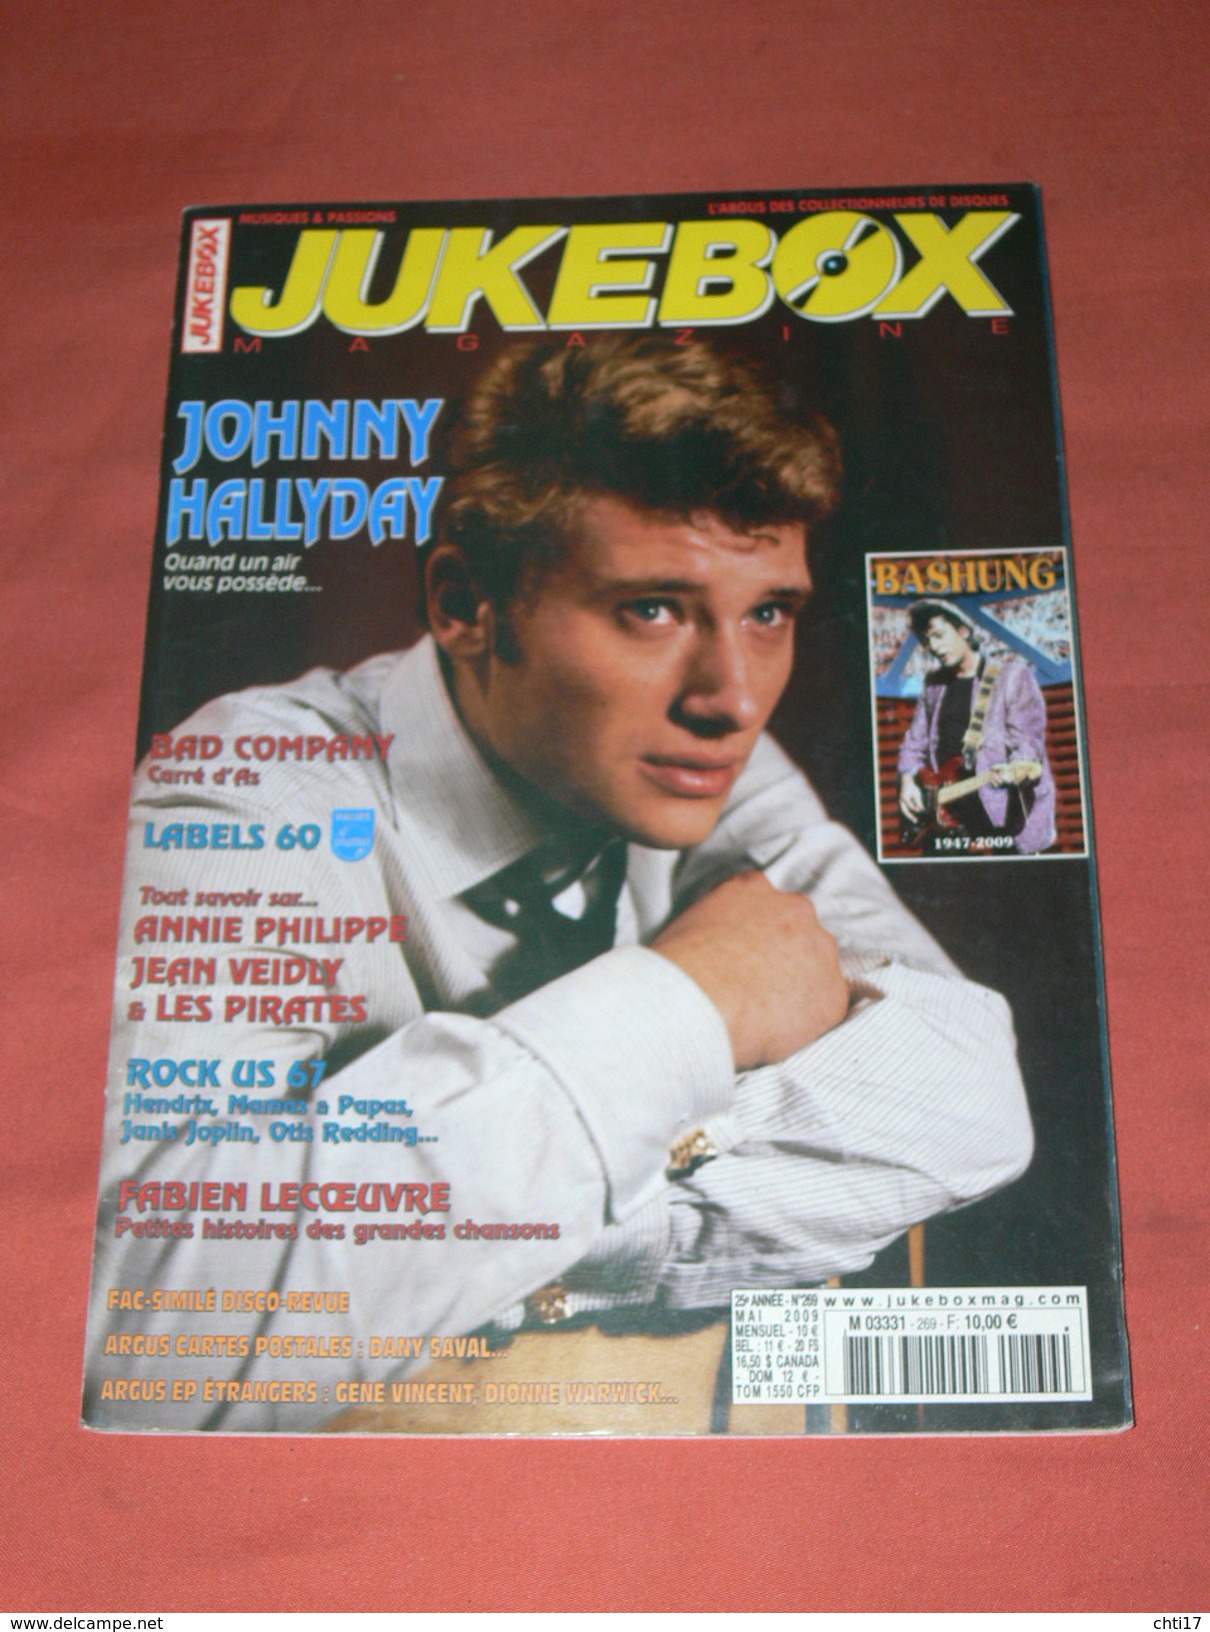 JUKEBOX MAGAZINE / COTE  DISQUES VINYLES 1960 / SPECIAL JOHNNY HALLYDAY / BASHUNG 1947 2009 /COTE CARTES POSTALES RARETE - Musique